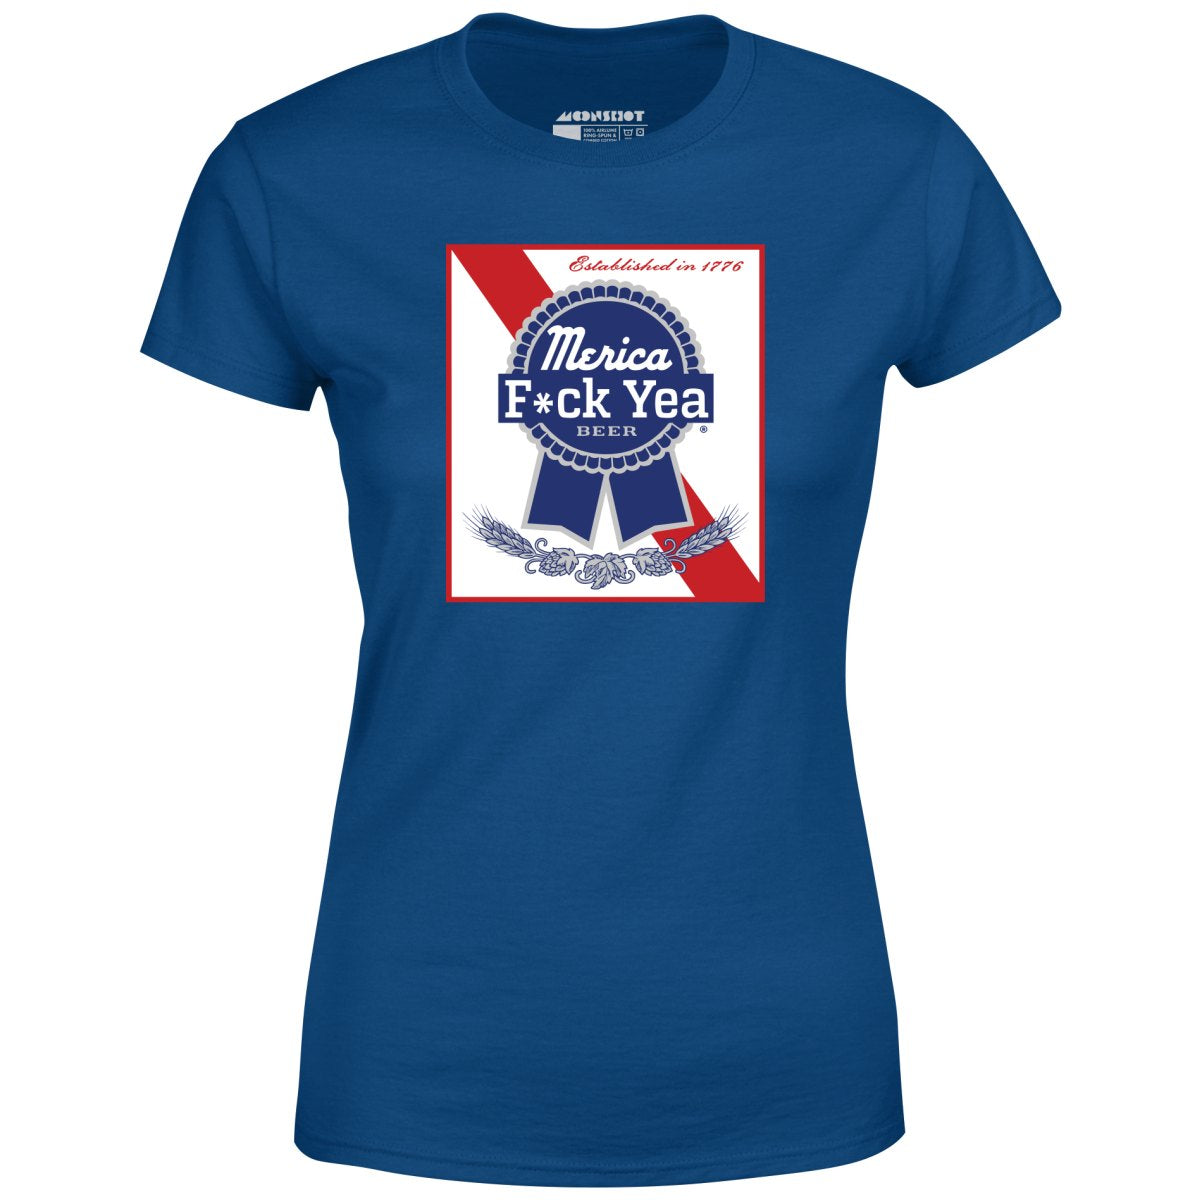 Merica F*ck Yea Beer - Women's T-Shirt